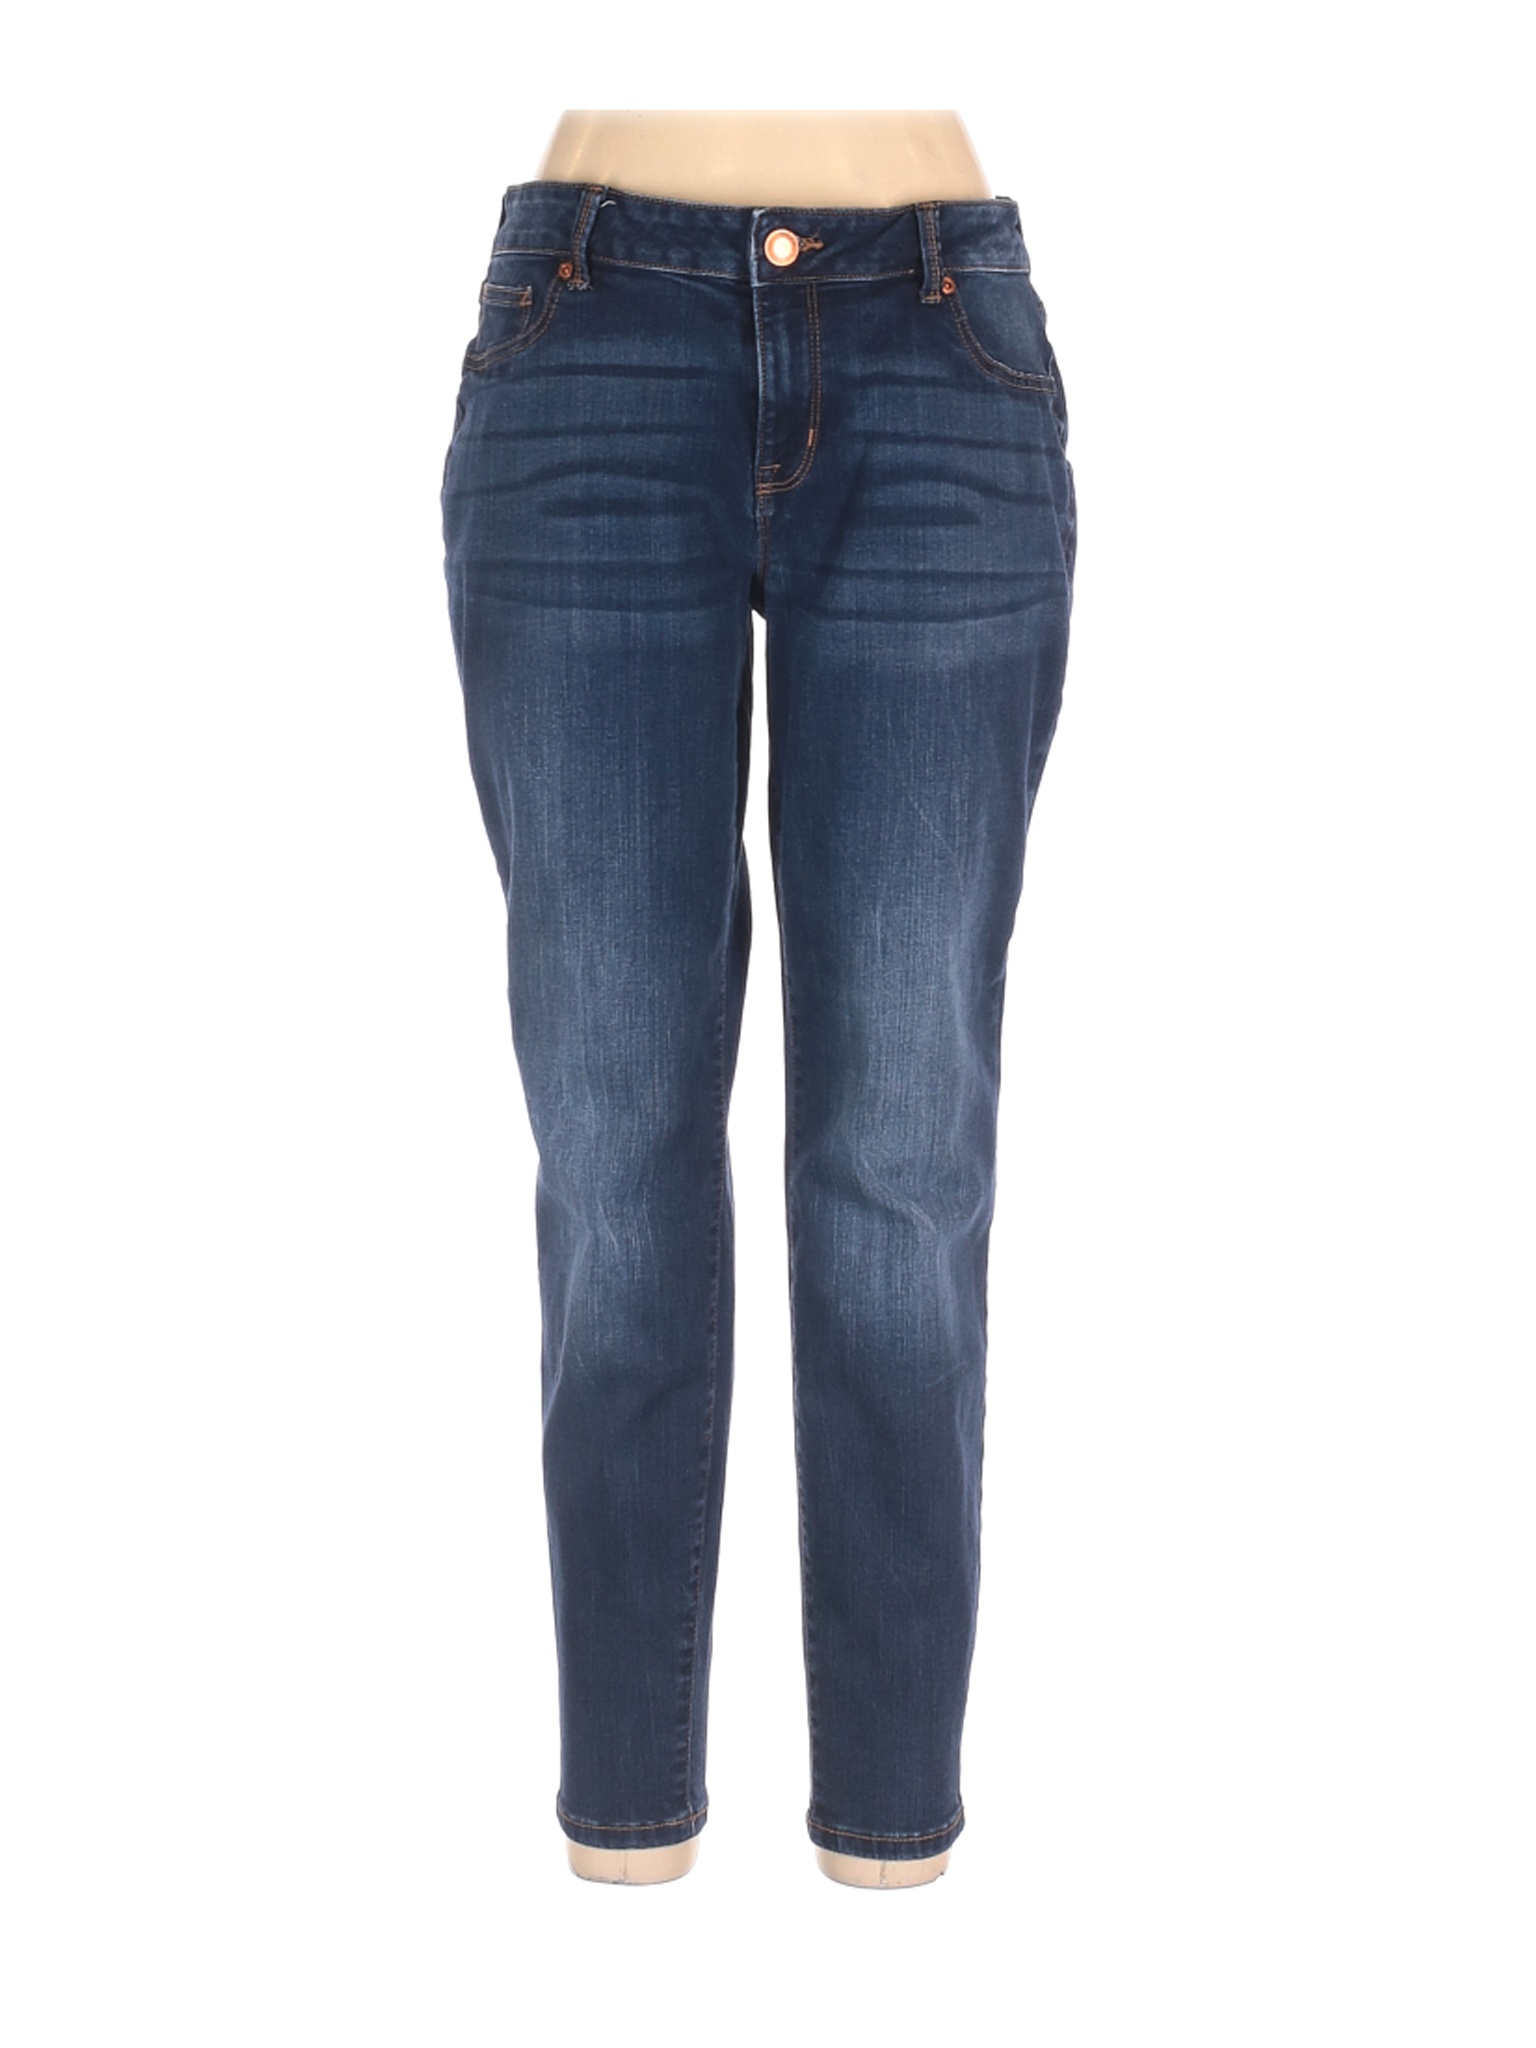 Maurices Women Blue Jeans XL | eBay